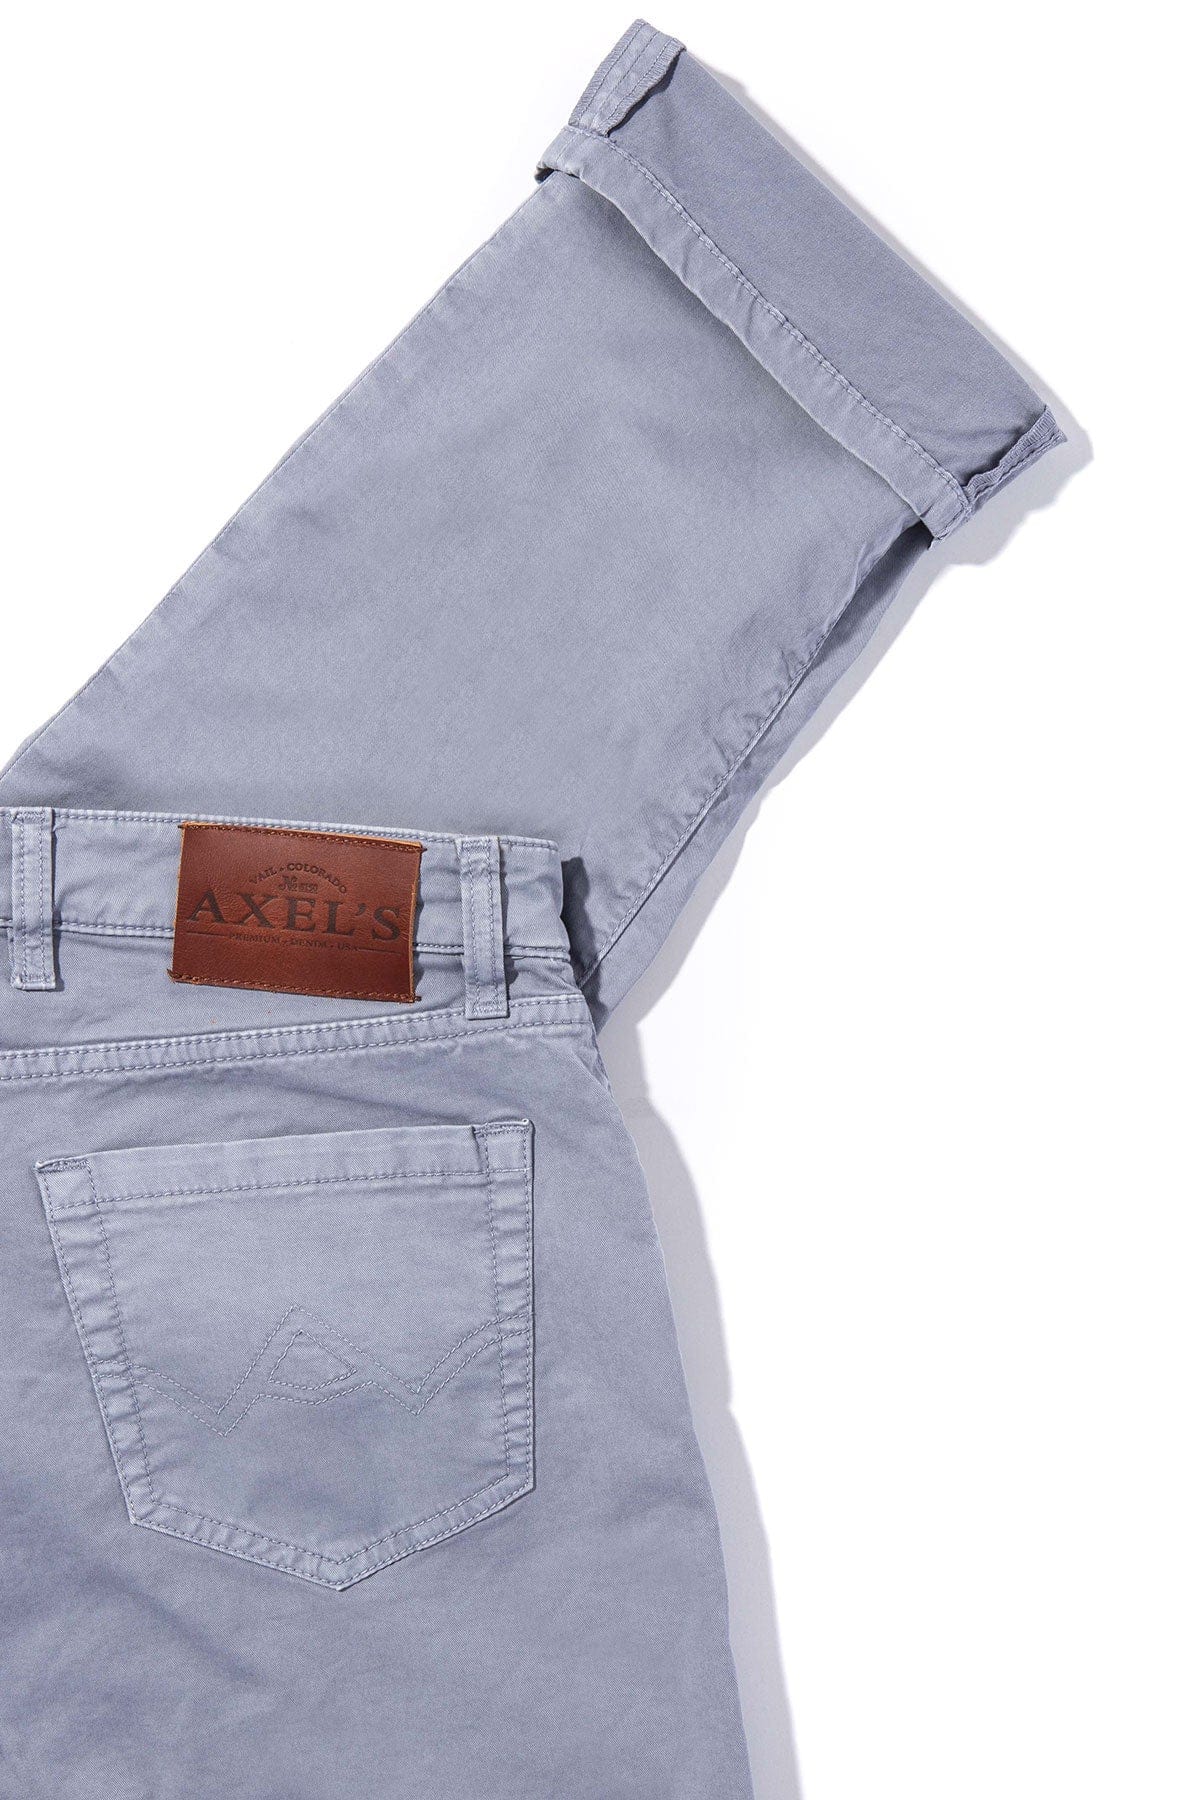 Flagstaff Colored Jeans | Axel's Premium Denim – AXEL'S